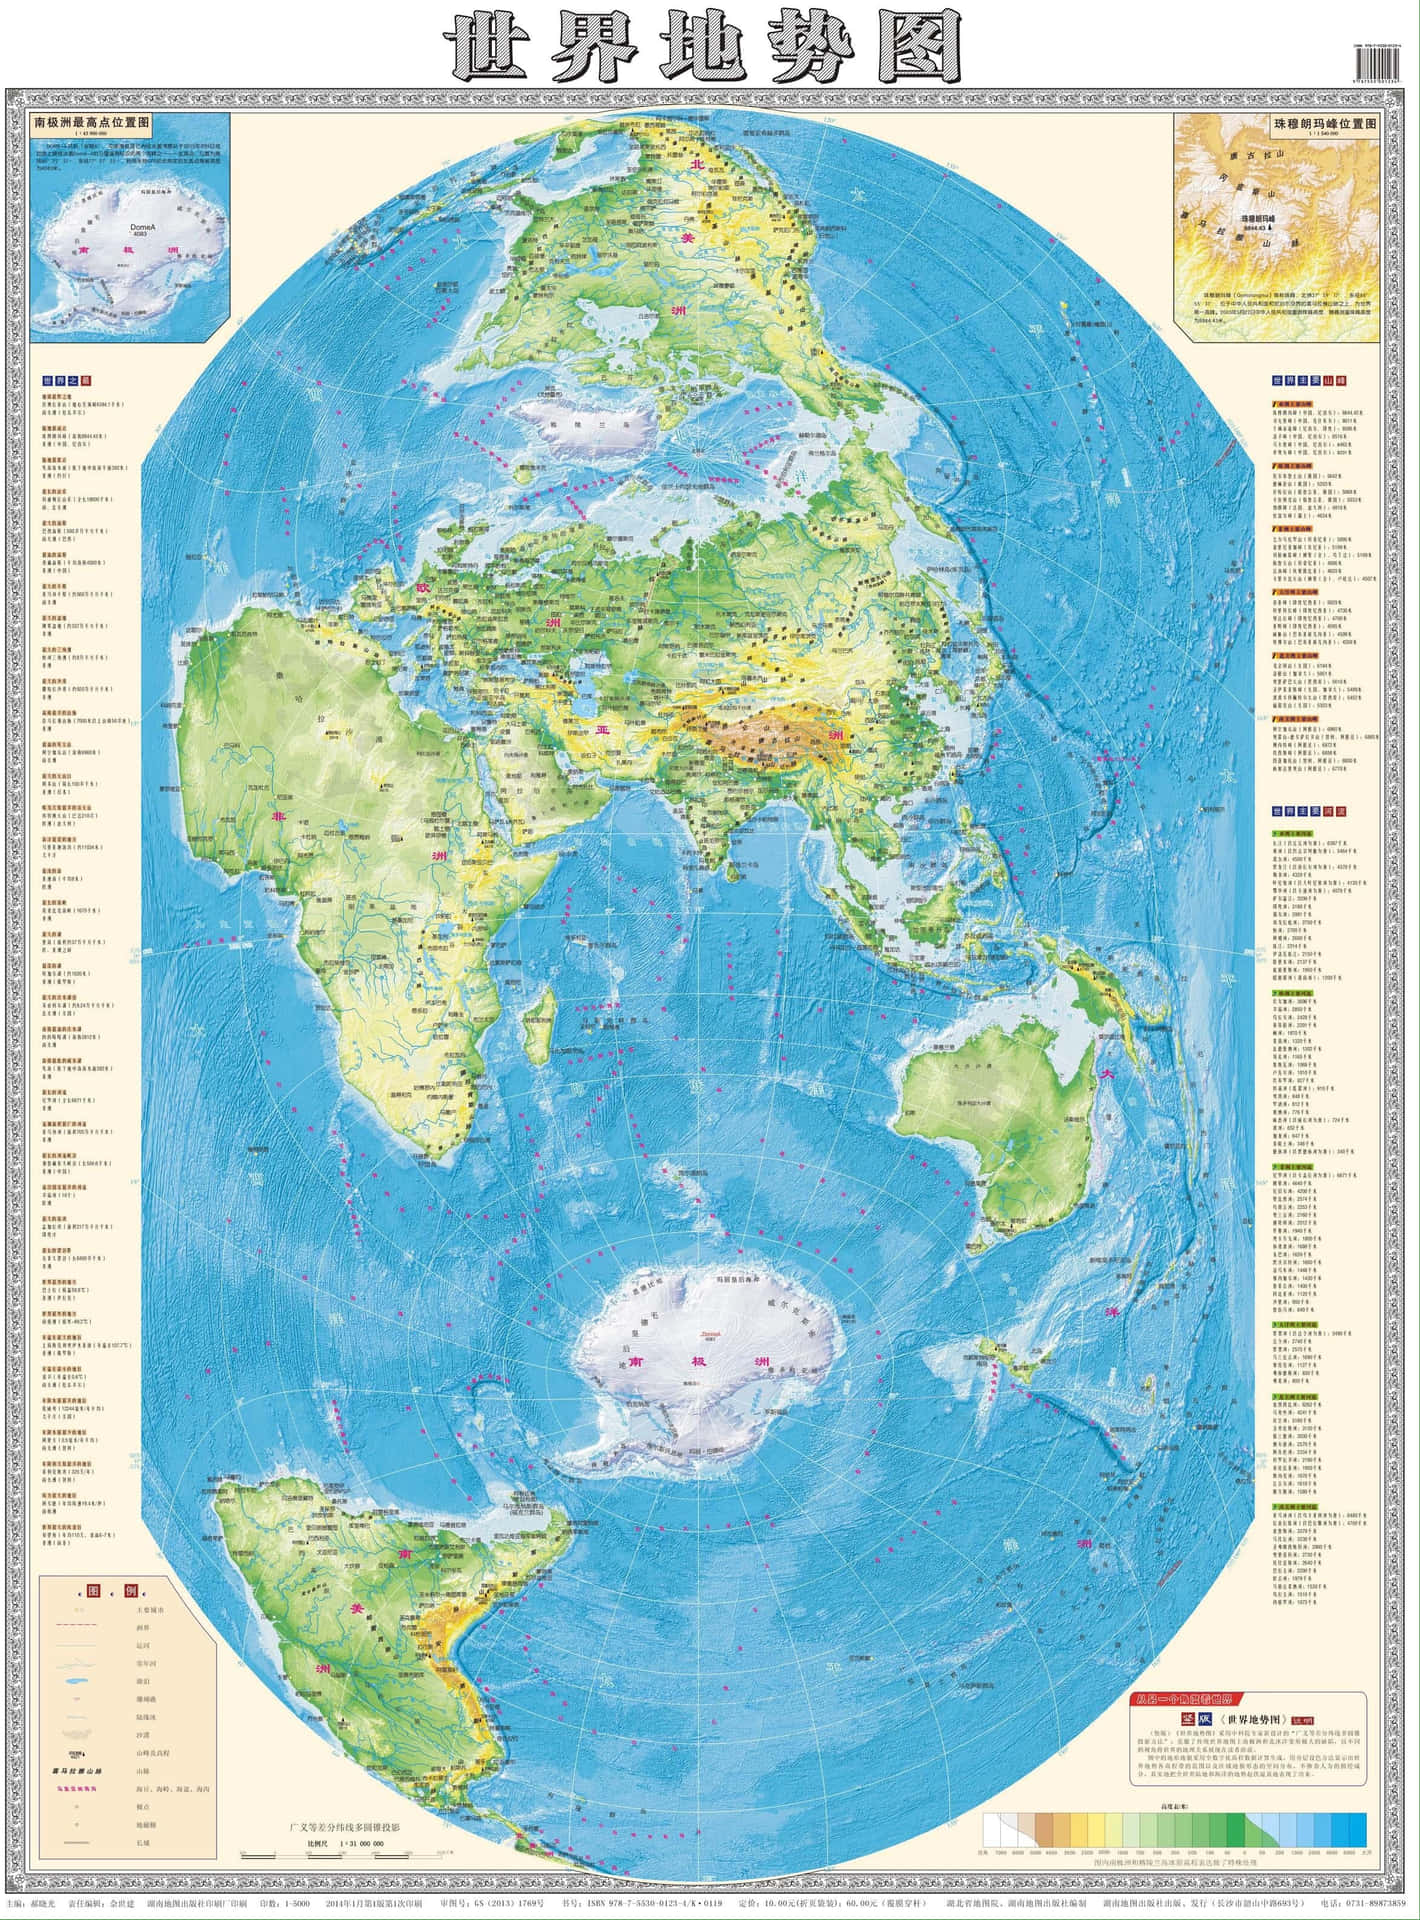 Imágenesdel Mapa Mundial Or Fotos Del Mapa Mundi